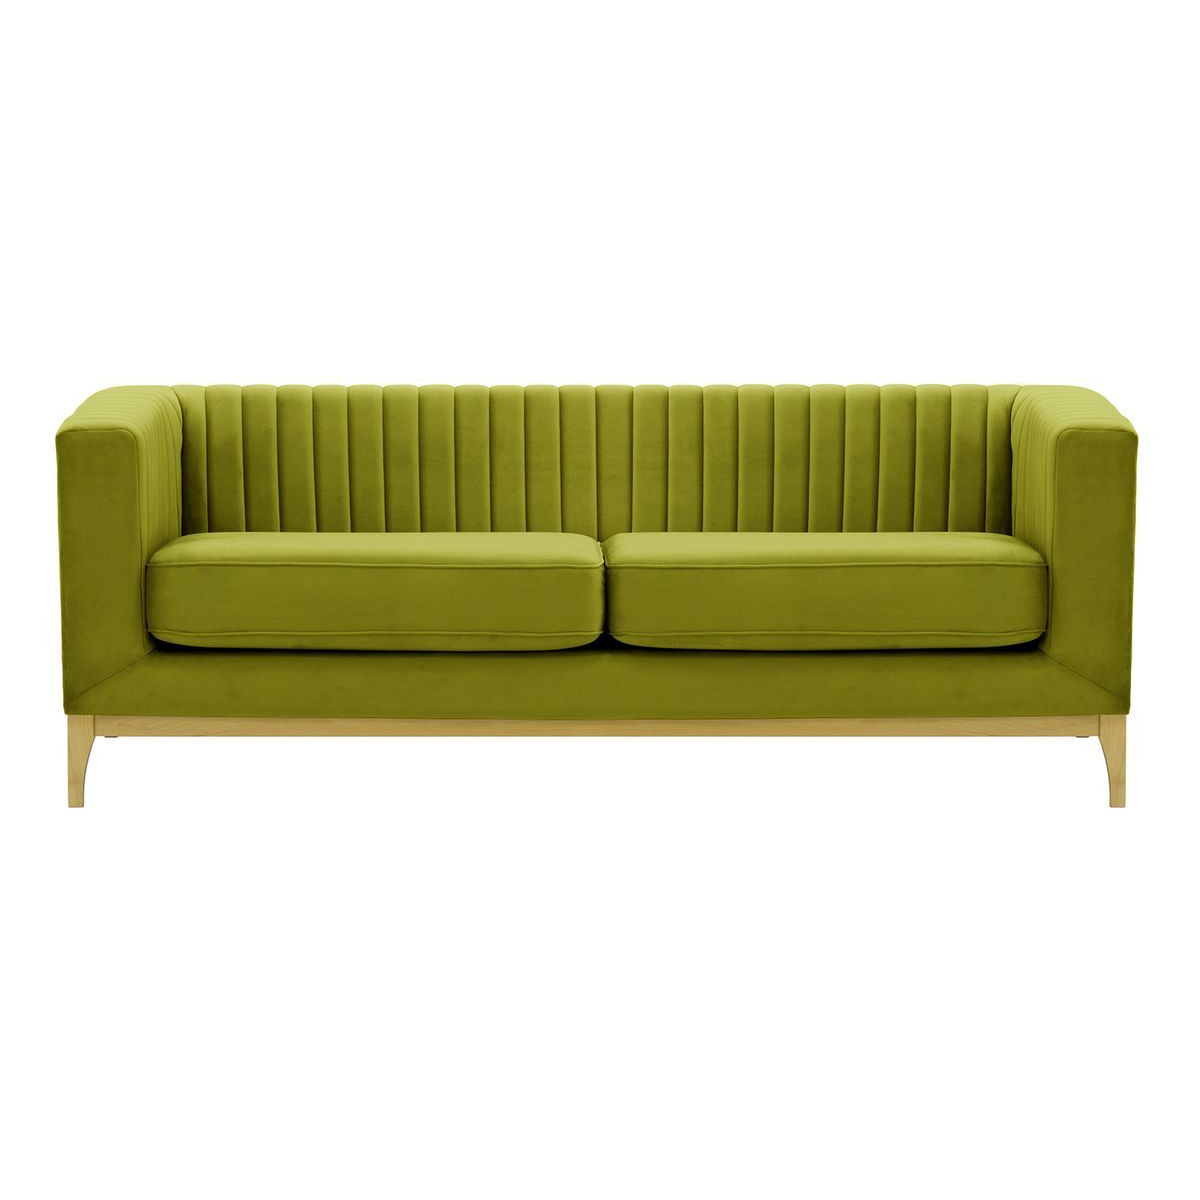 Slender Wood 3 Seater Sofa, olive green, Leg colour: like oak - image 1